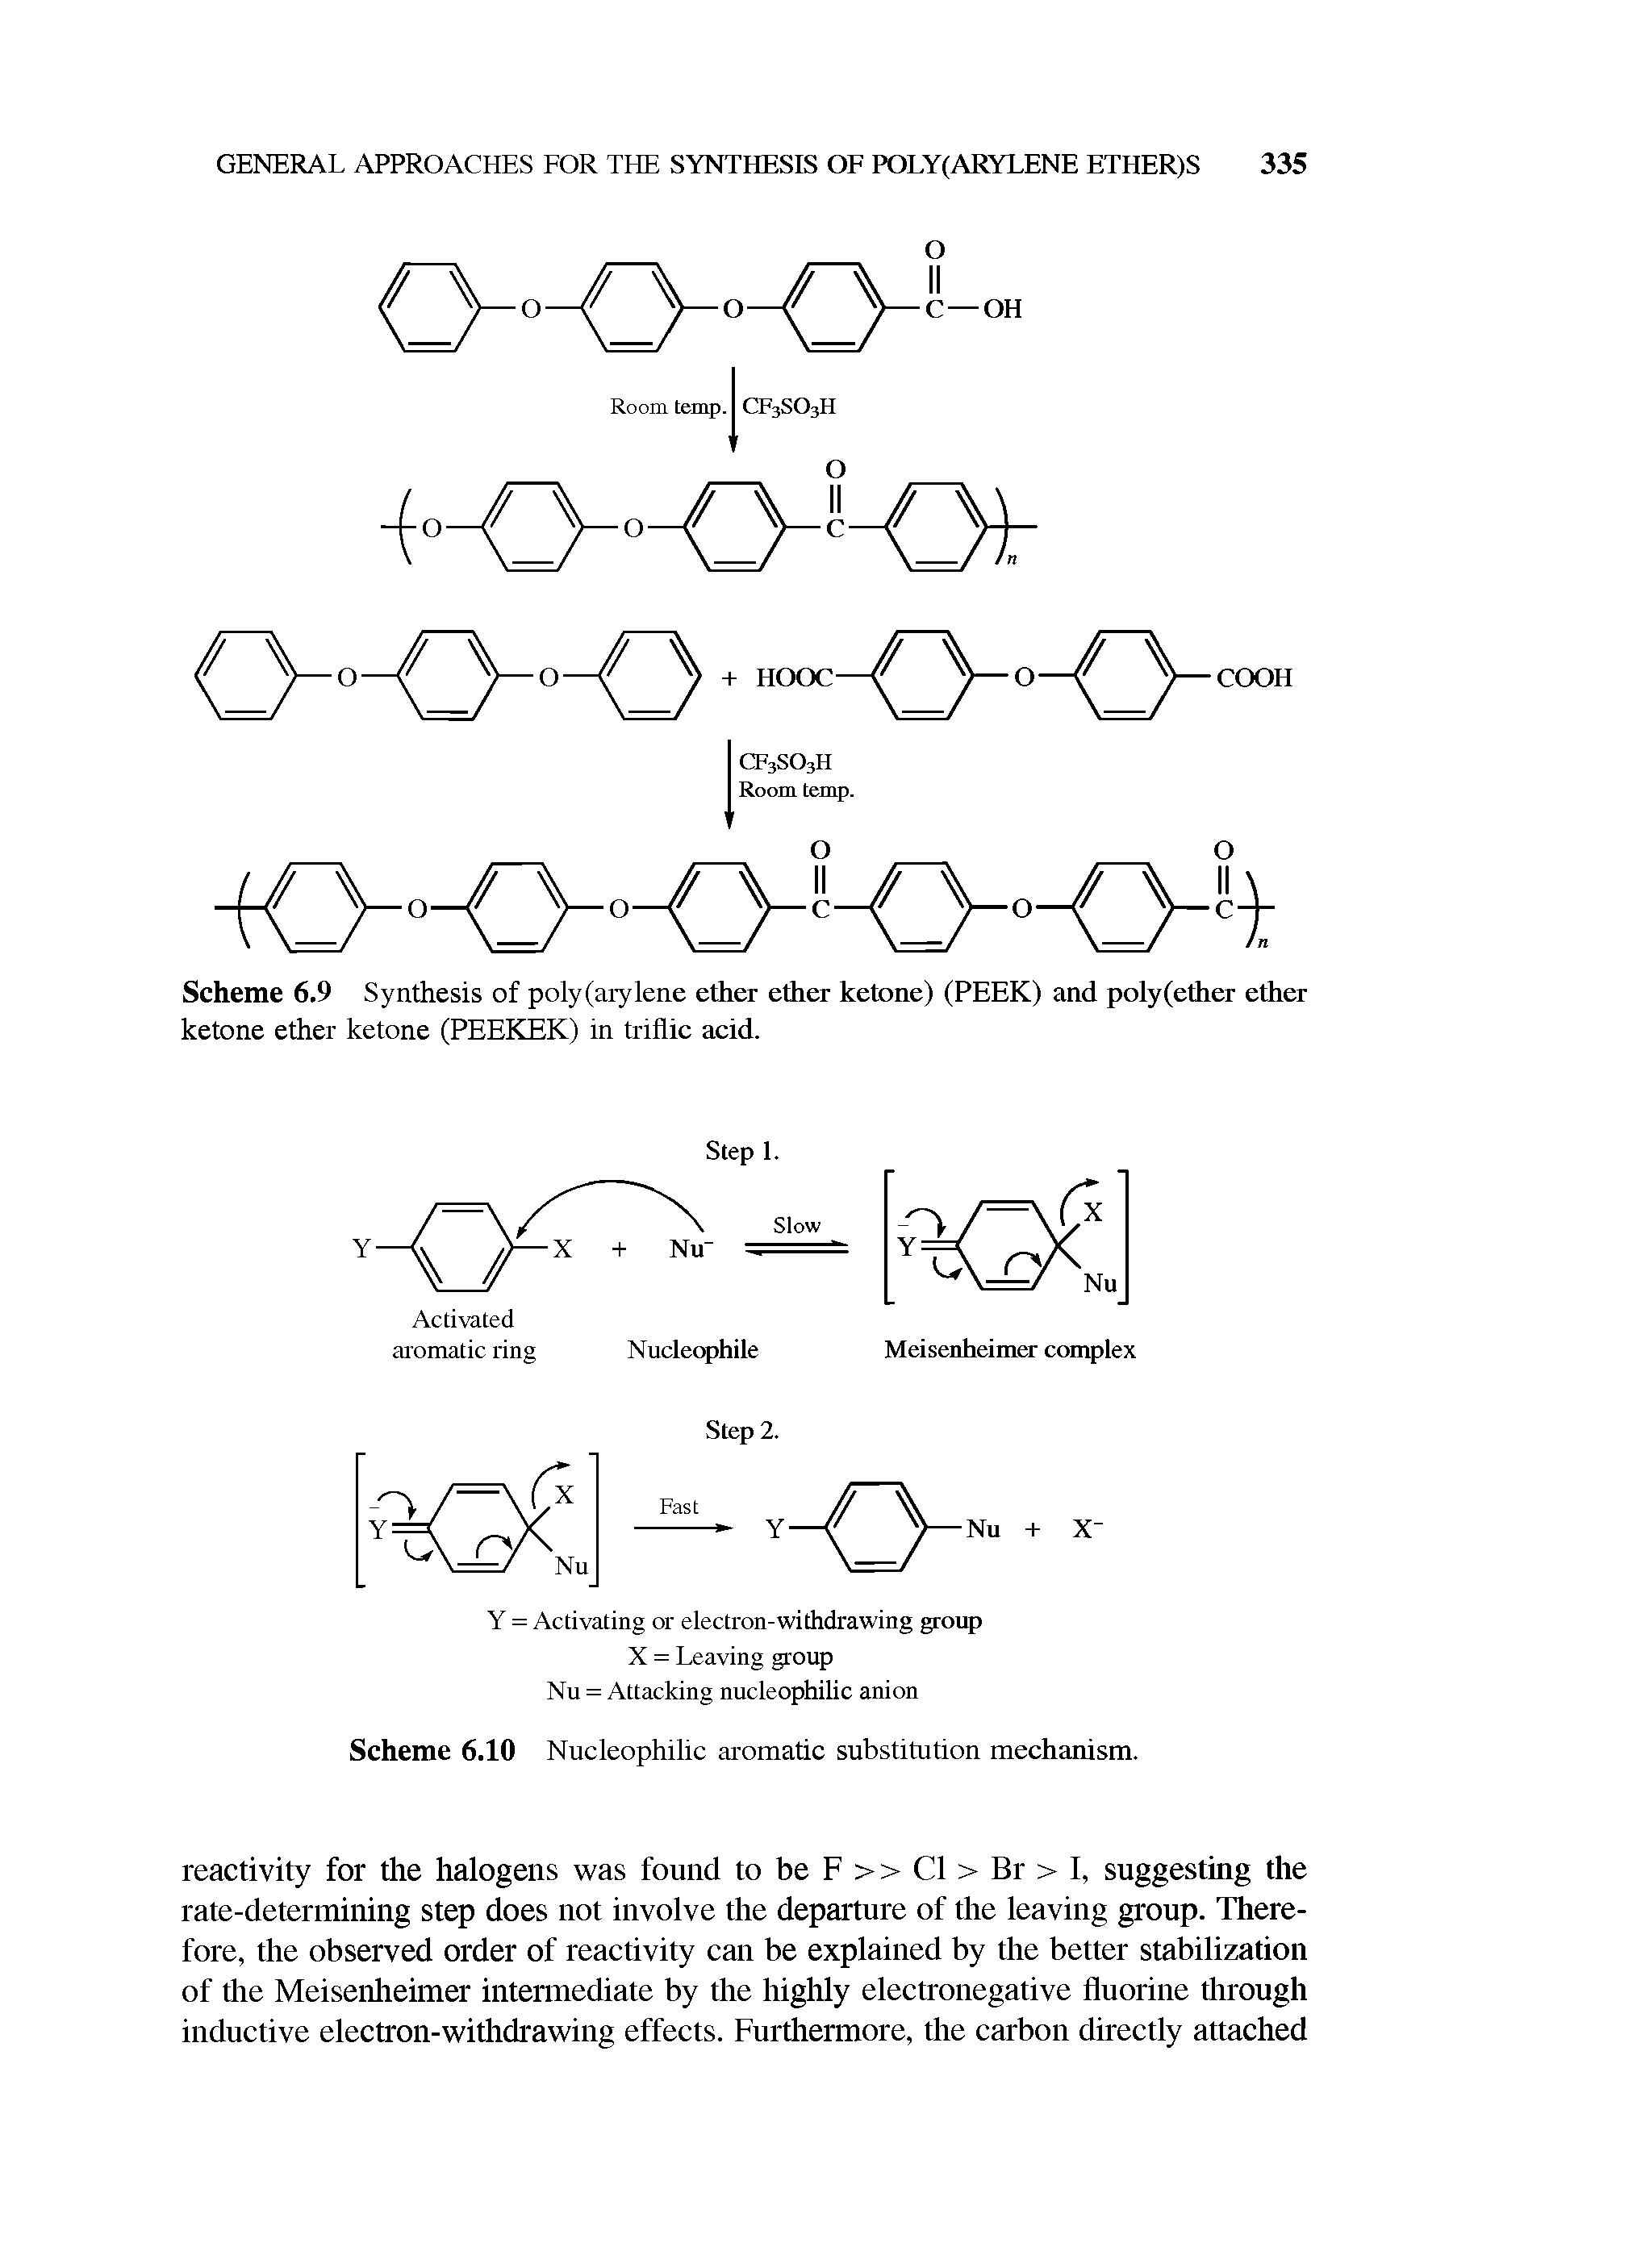 Scheme 6.9 Synthesis of poly(arylene ether ether ketone) (PEEK) and poly(ether ether ketone ether ketone (PEEKEK) in triflic acid.